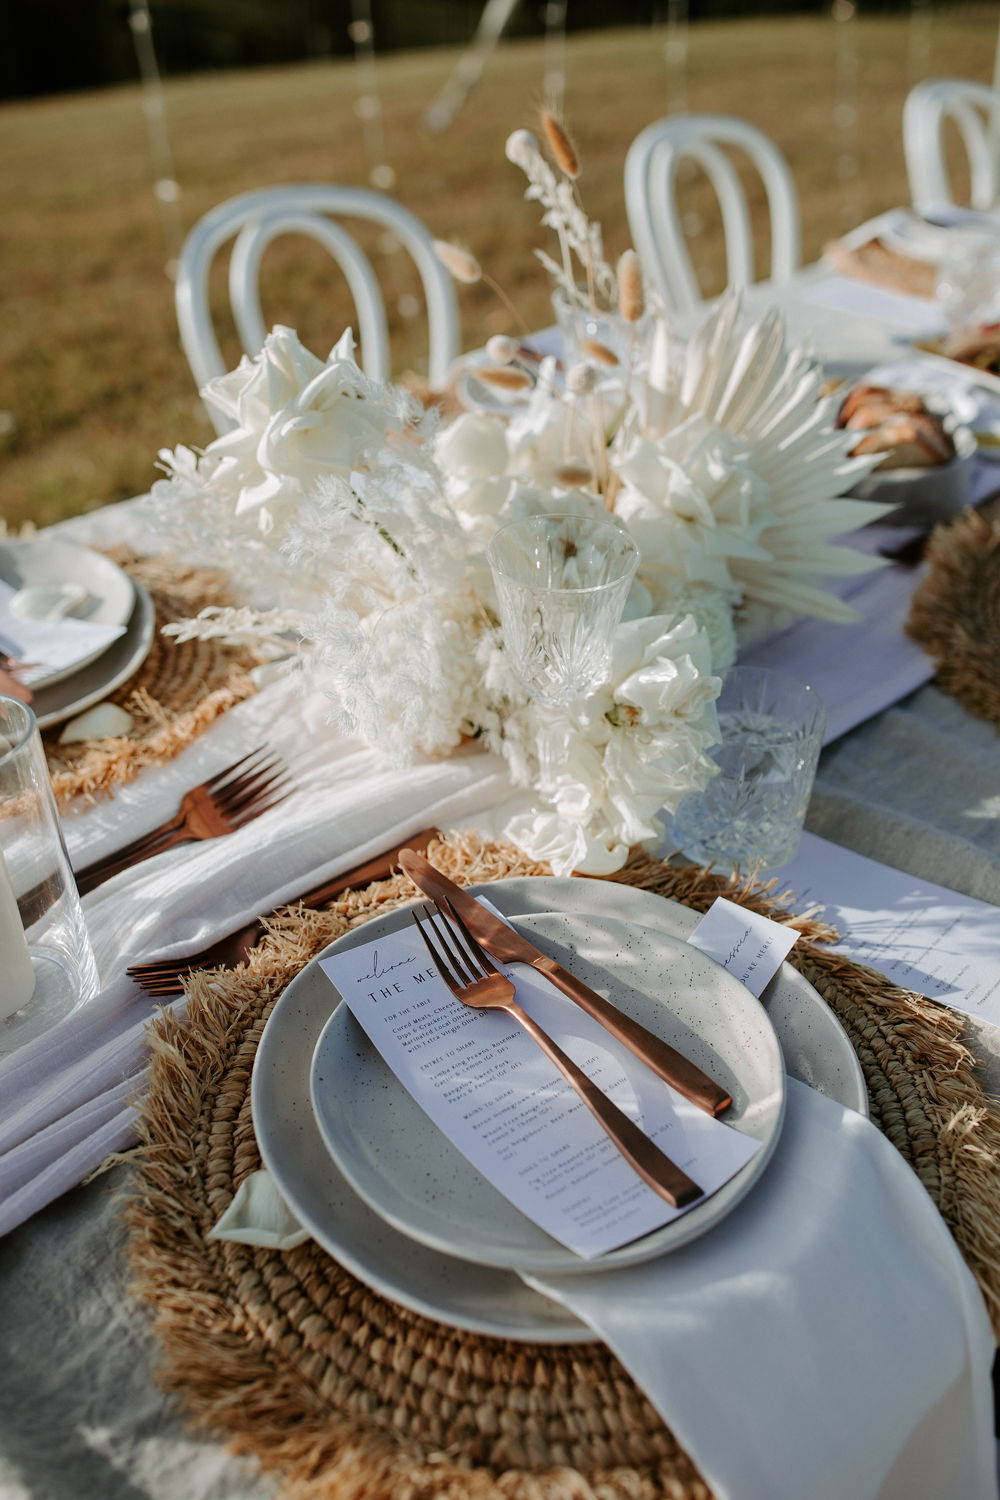 Boho style dining set up with white flowers